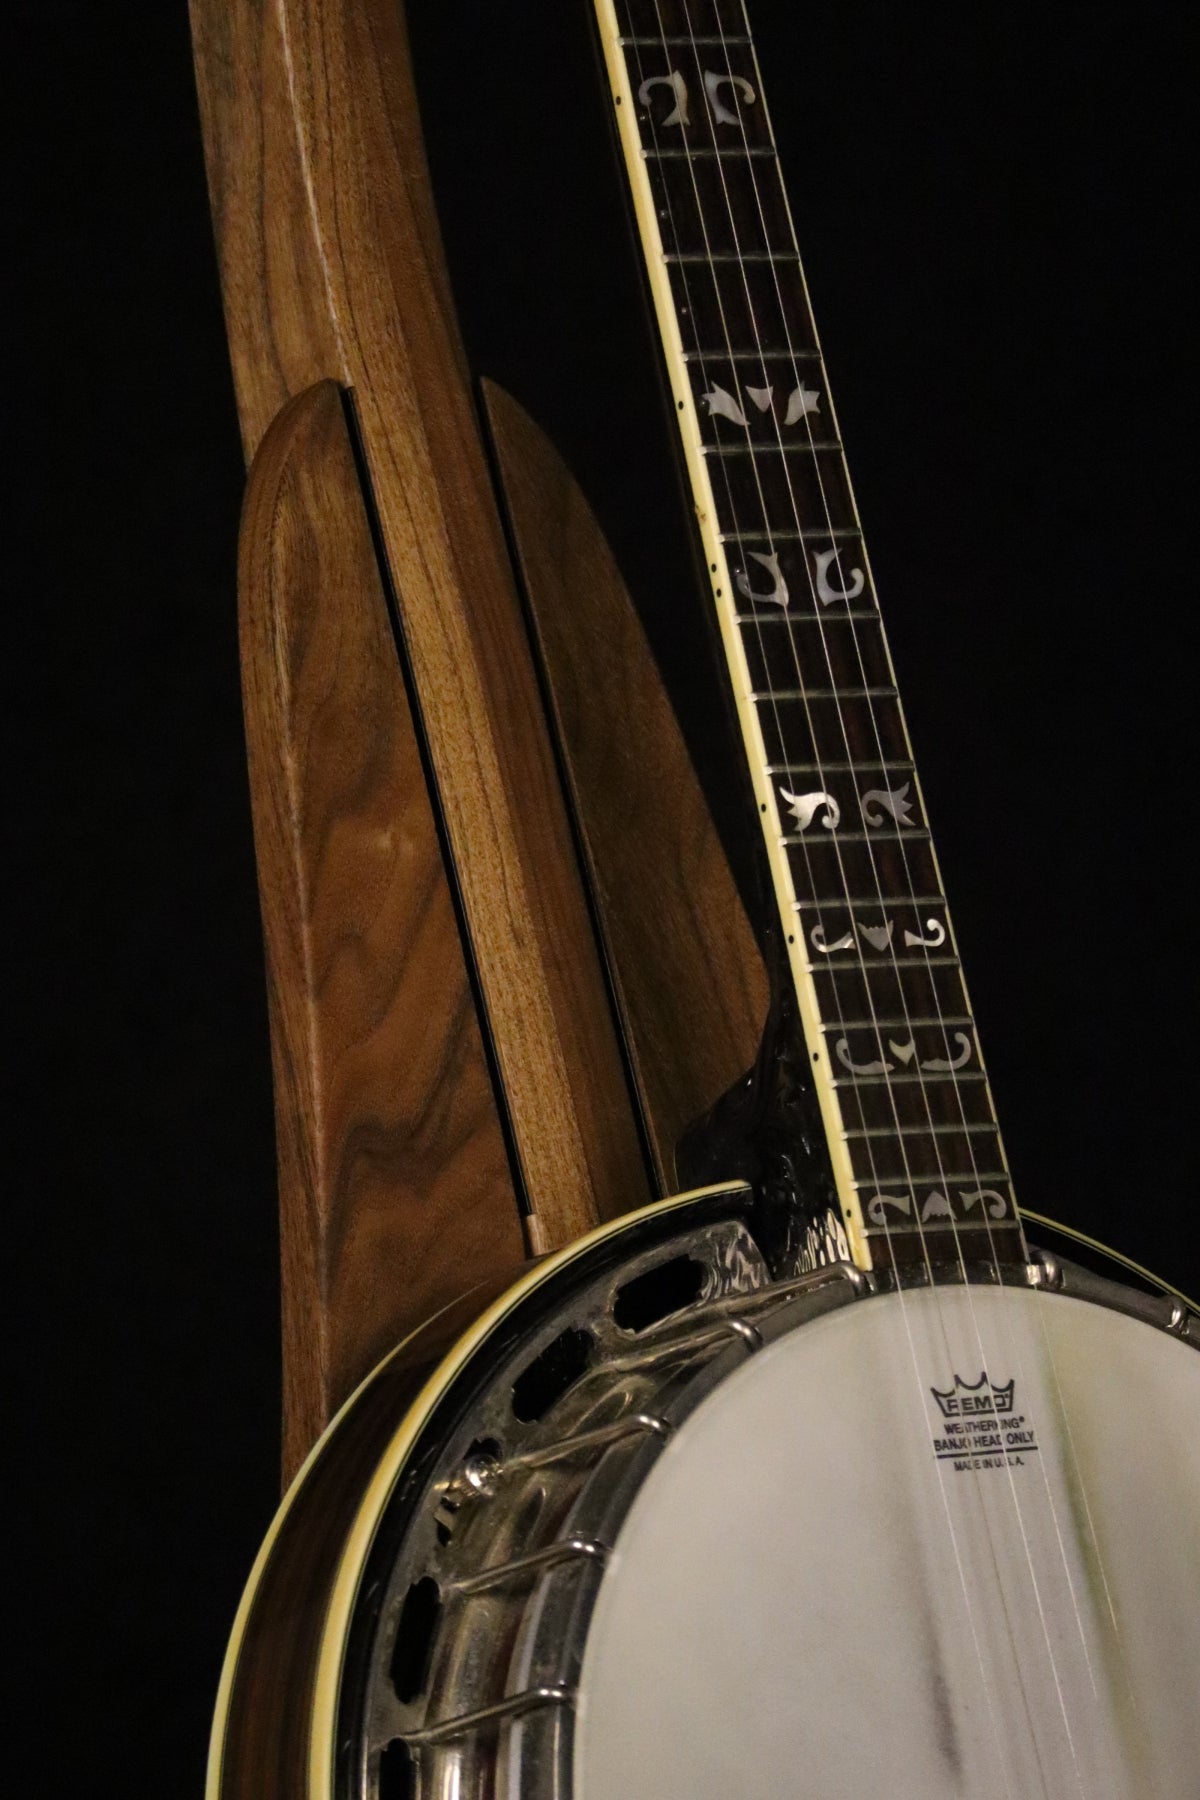 Folding walnut wood banjo floor stand closeup front image with Alvarez banjo